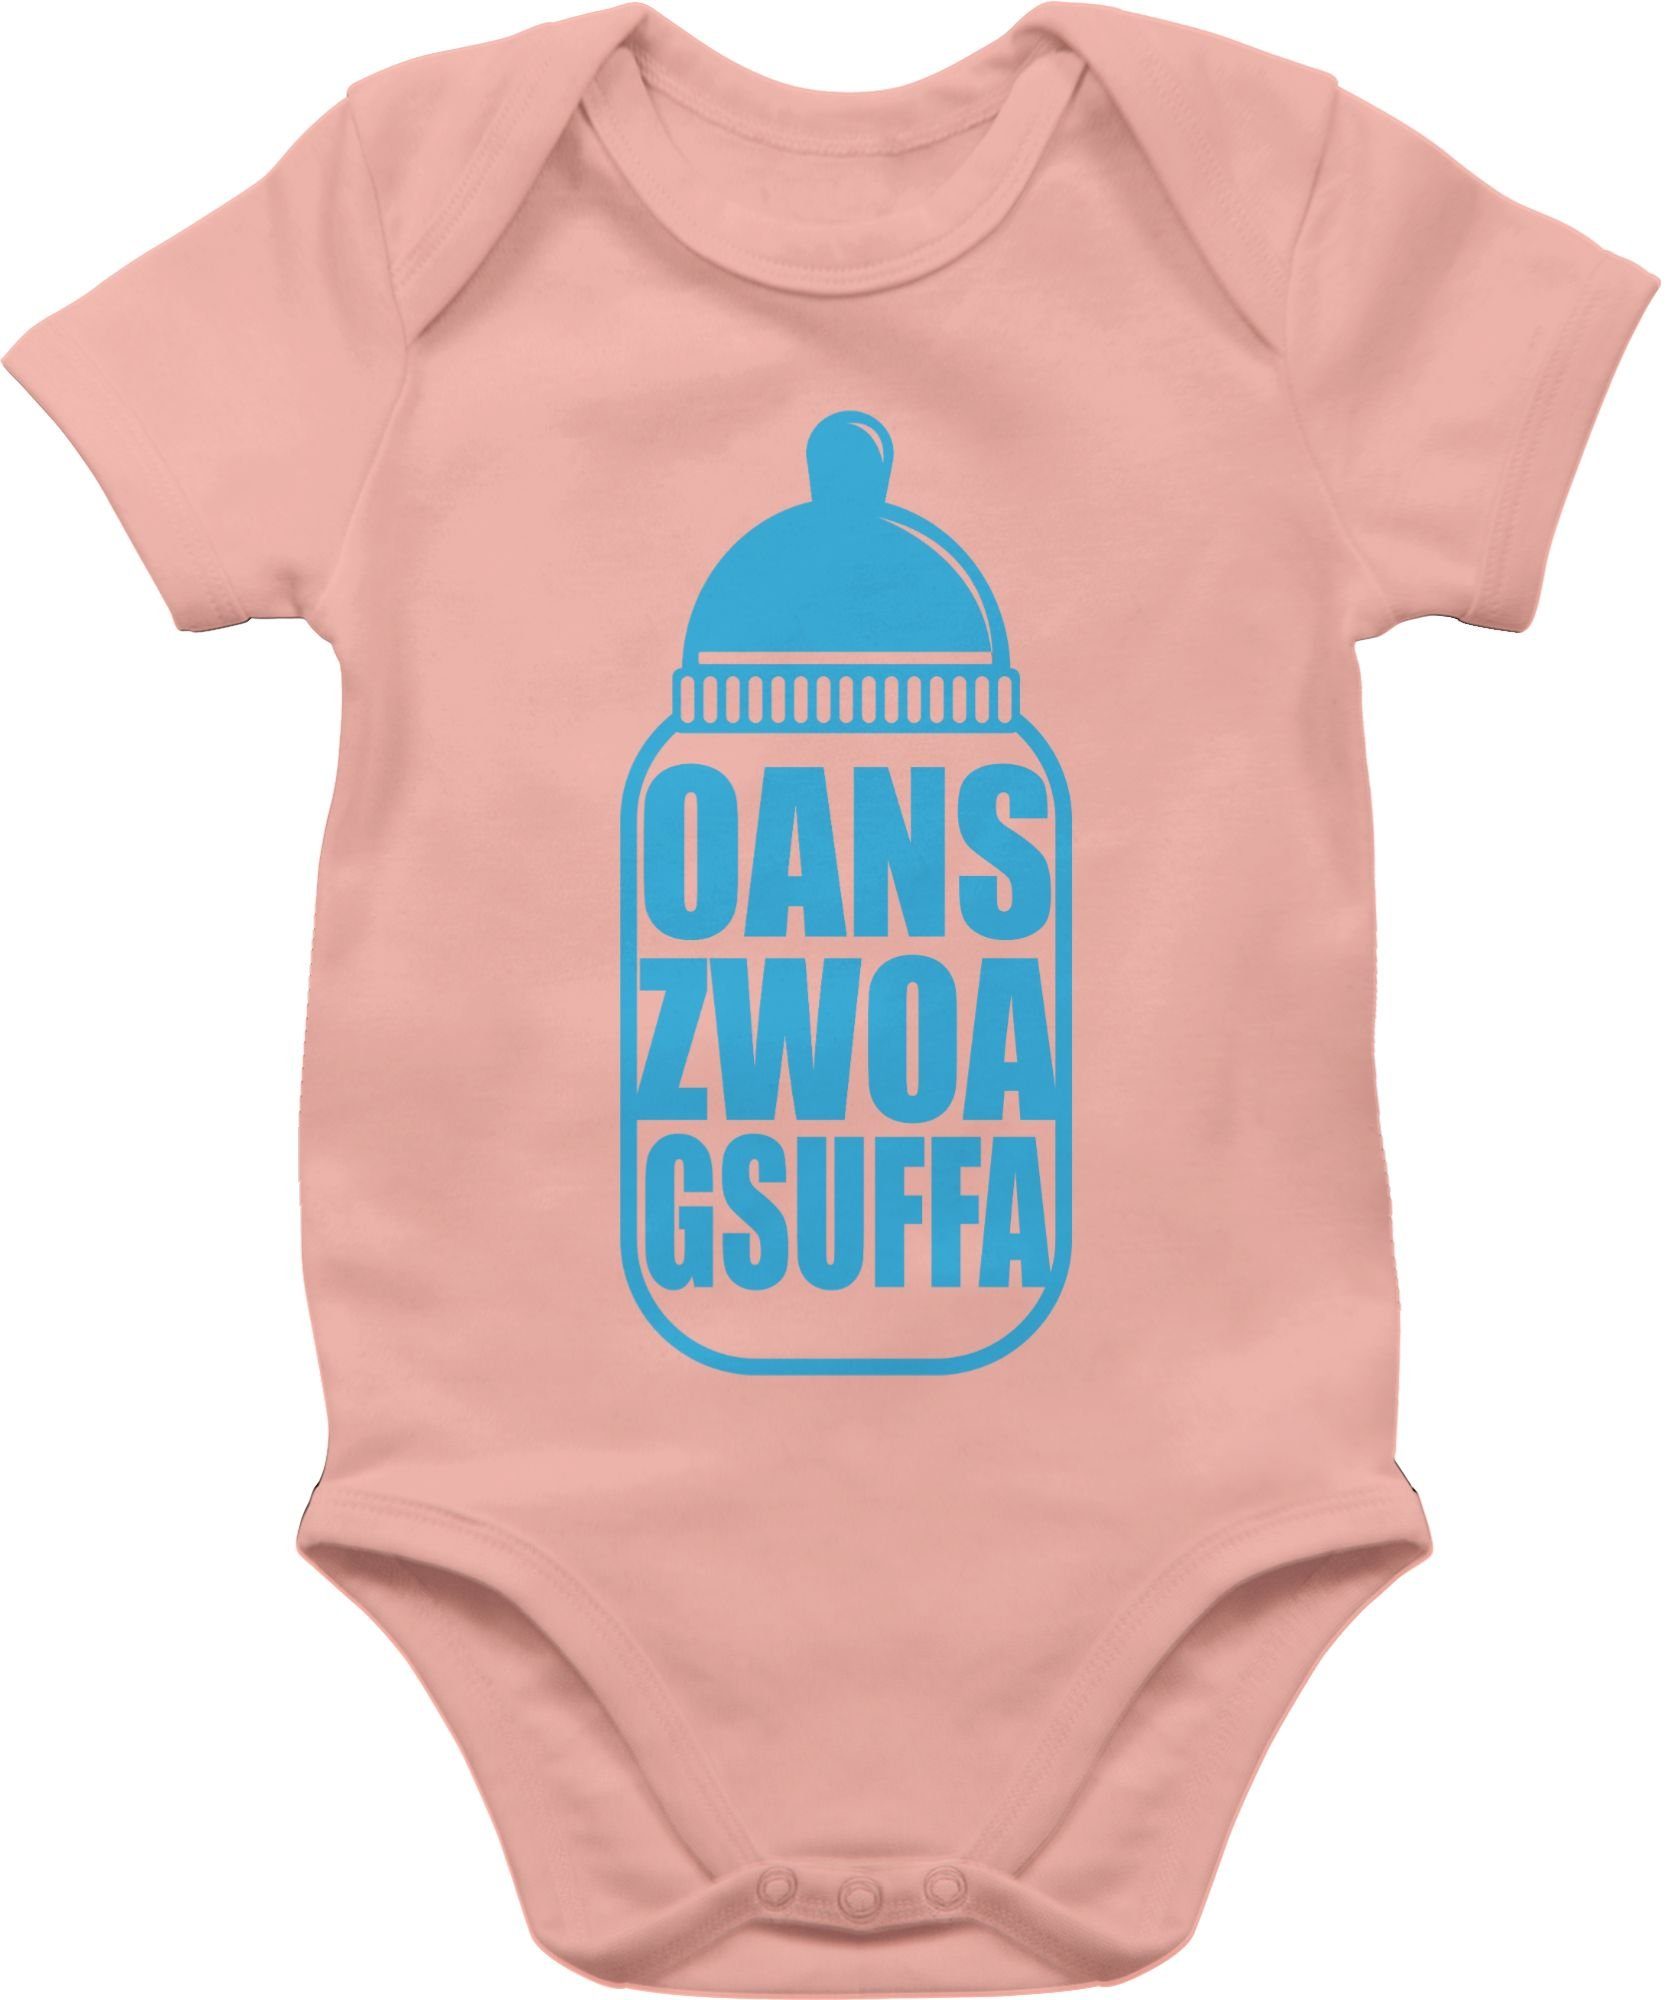 Shirtracer Shirtbody Babyflasche Oans Zwoa Gsuffa blau Mode für Oktoberfest Baby Outfit 3 Babyrosa